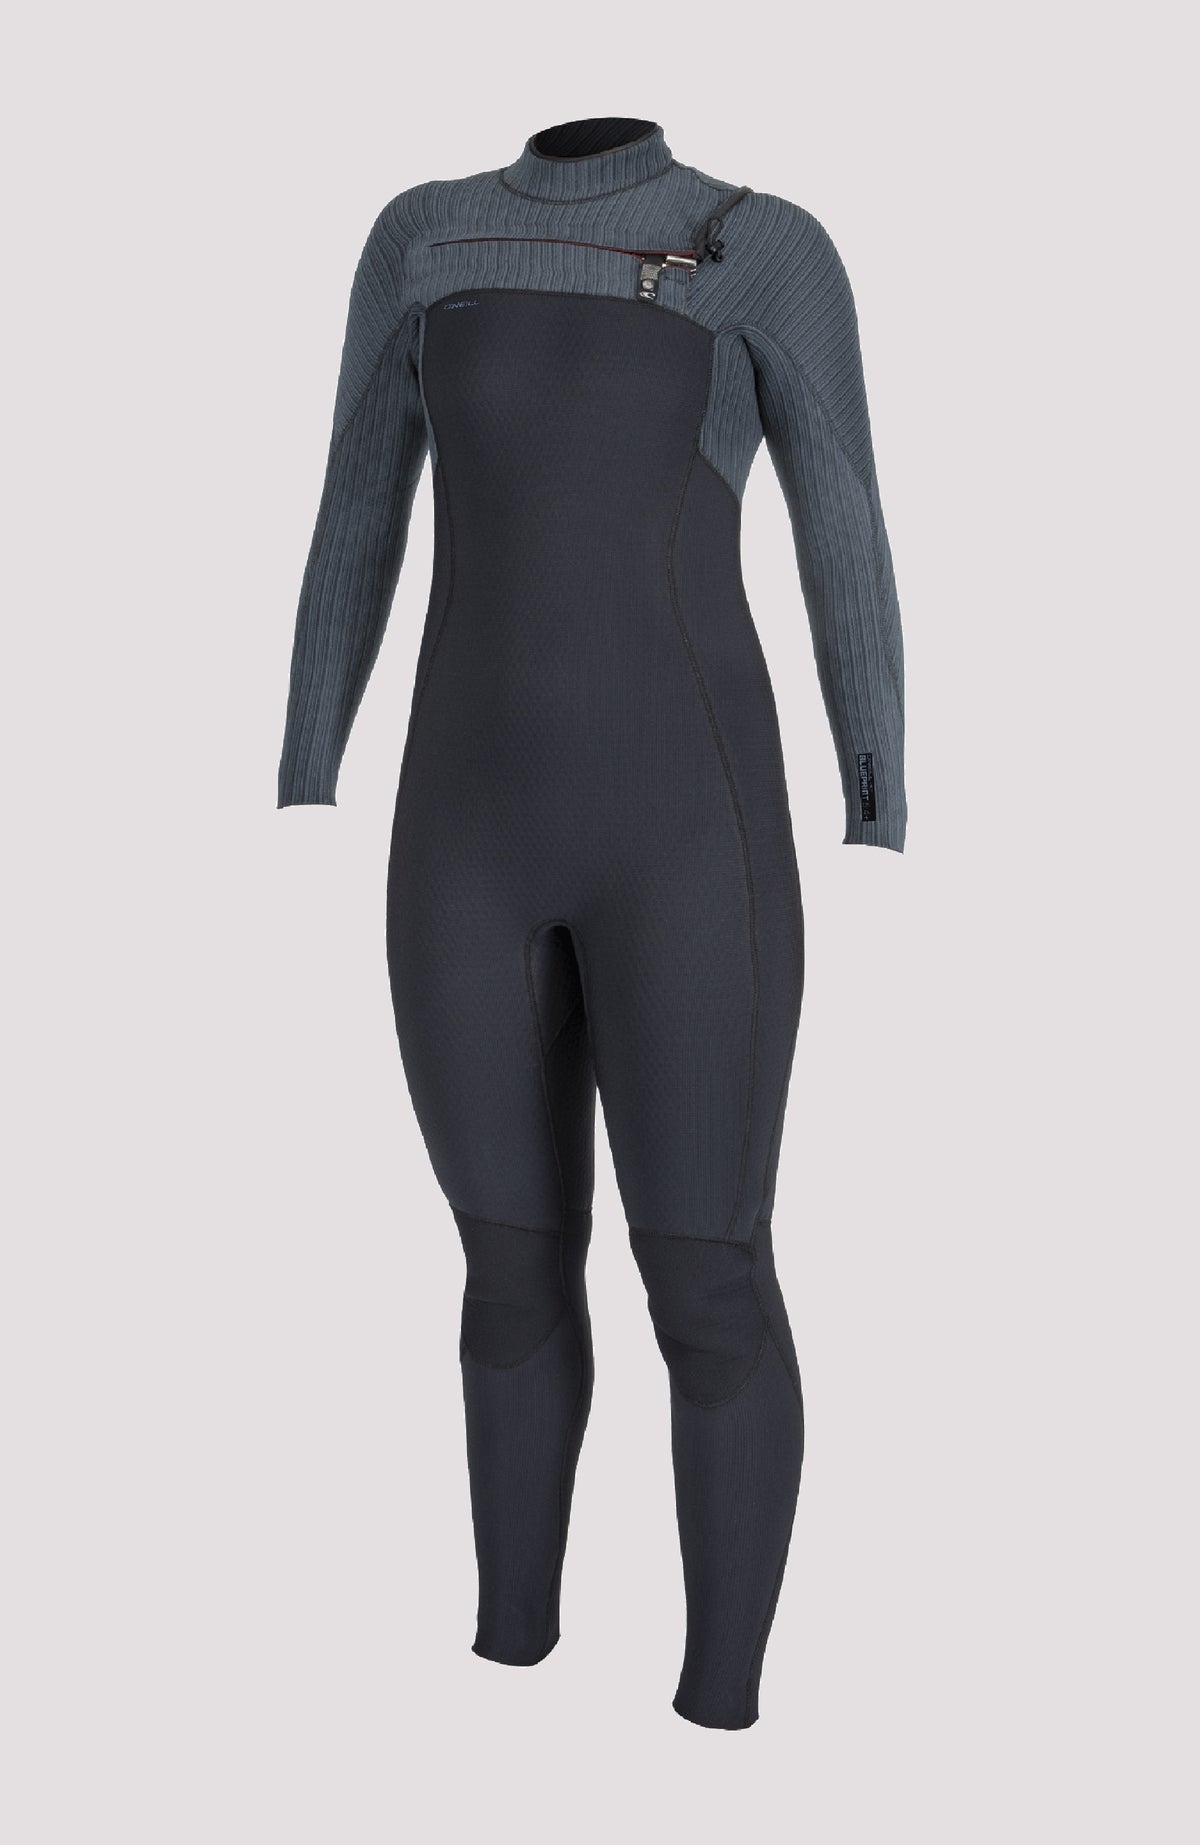 Blueprint 5/4mm Chest Zip Full Wetsuit | BLACK/SHADE – O'Neill